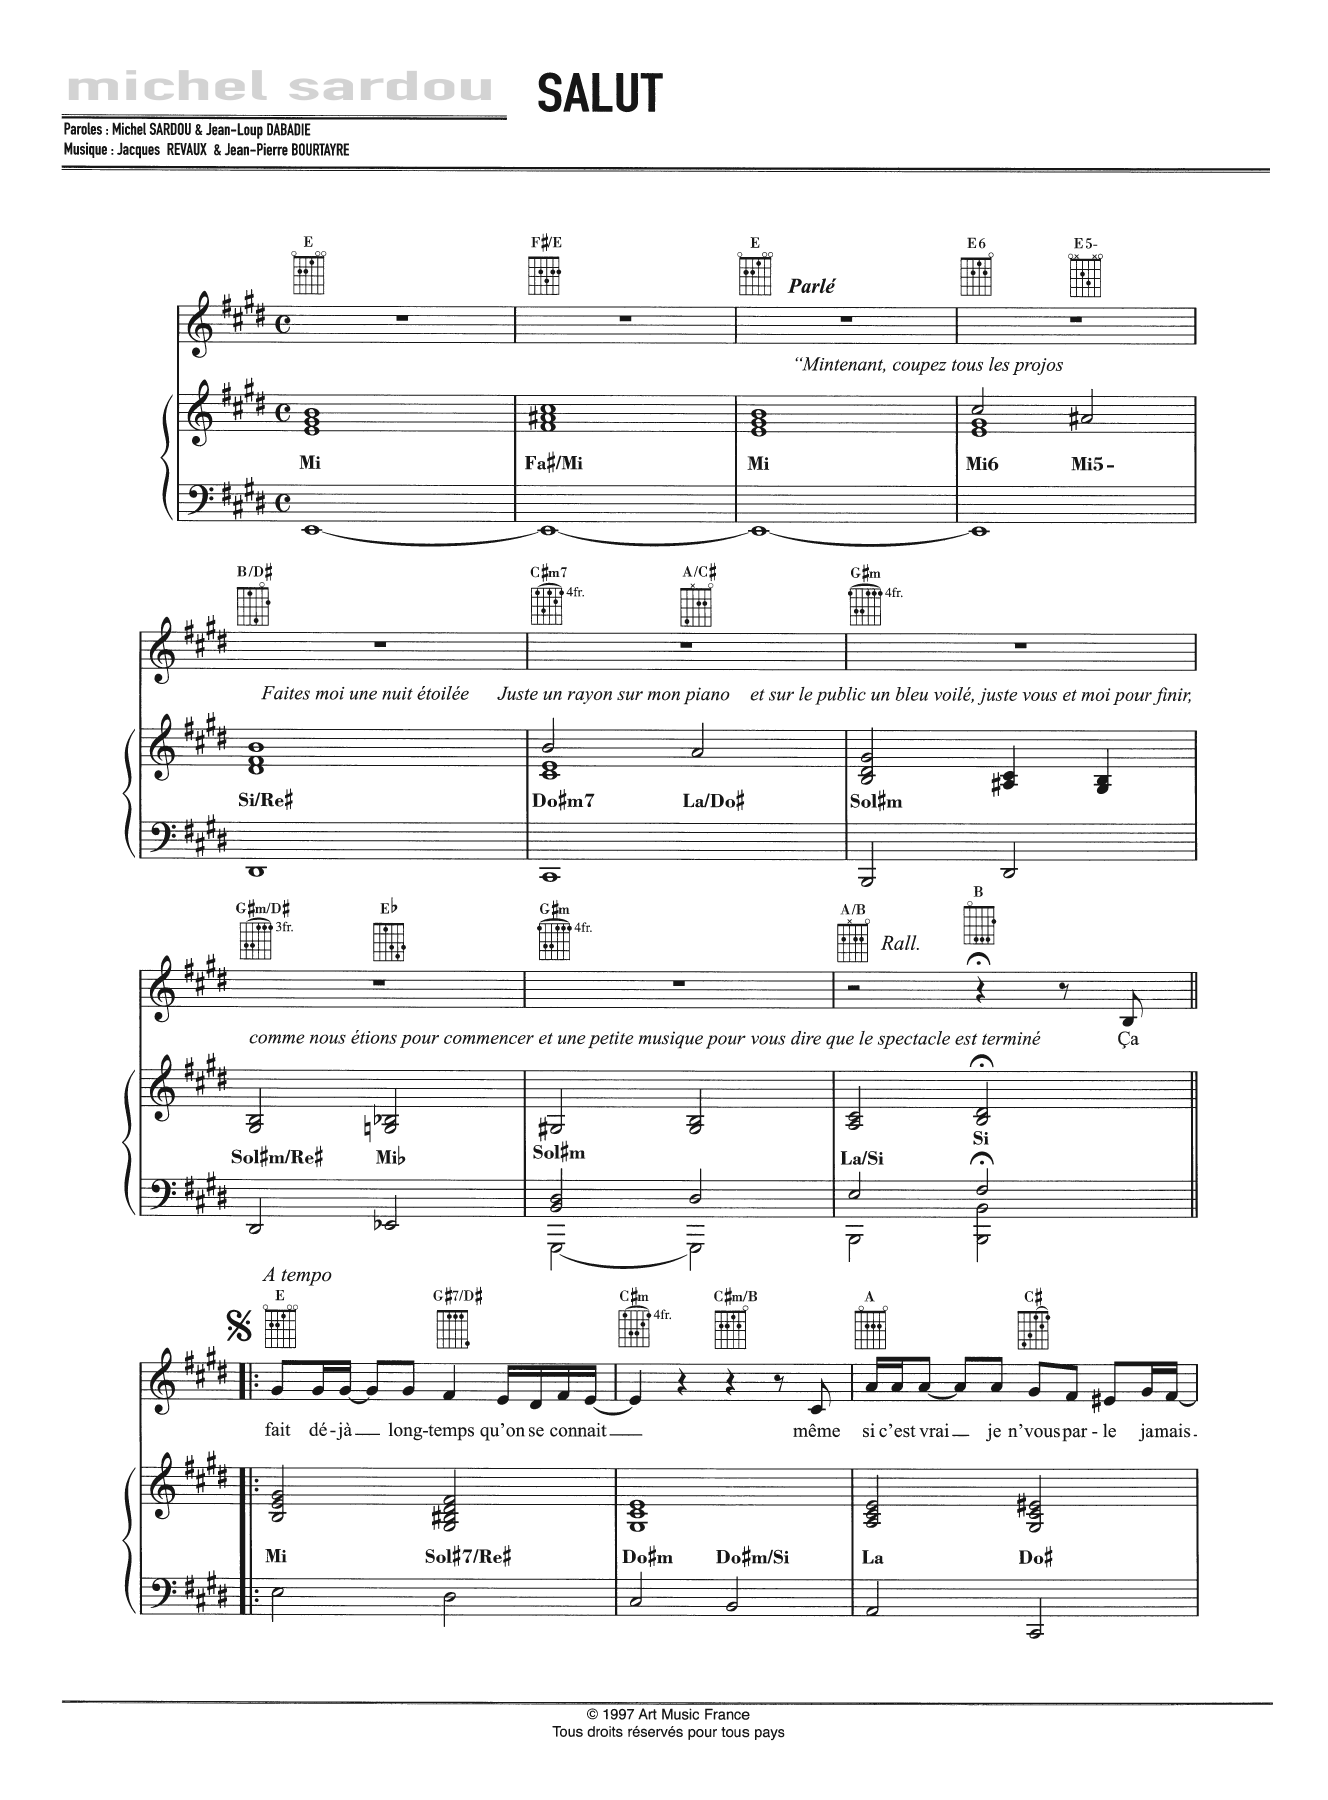 Michel Sardou Salut Sheet Music Notes & Chords for Piano, Vocal & Guitar - Download or Print PDF